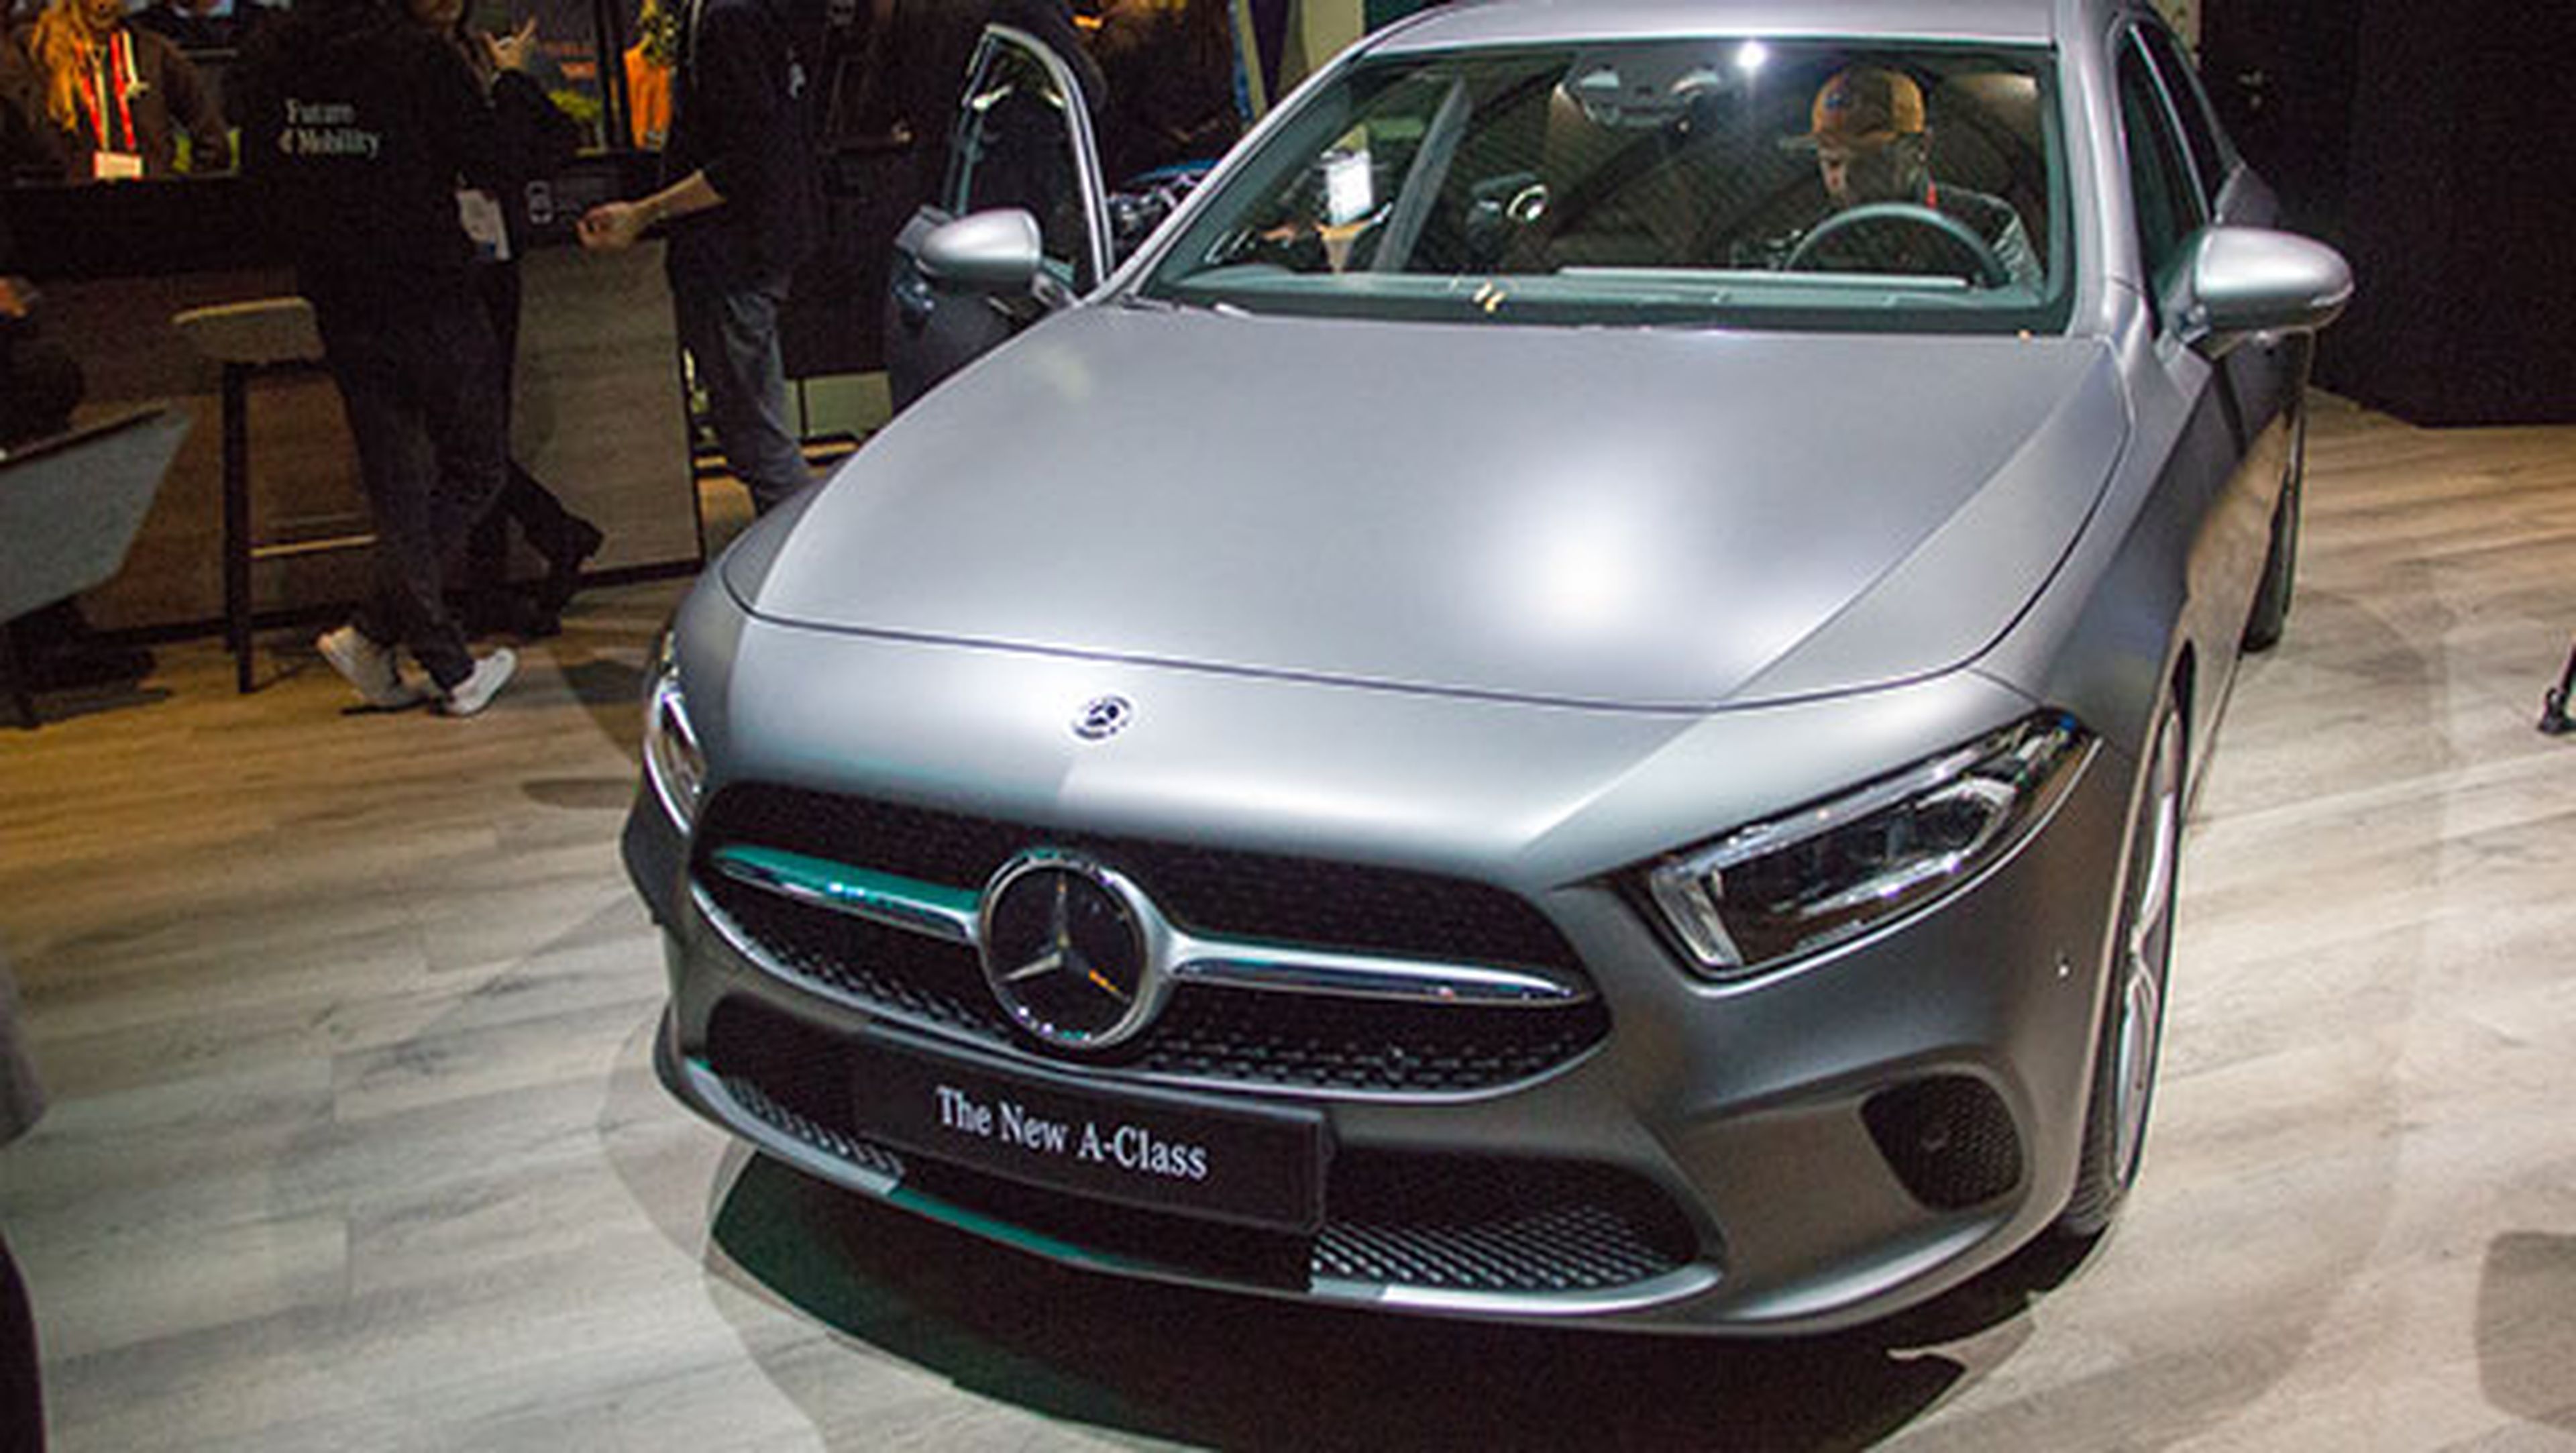 El Mercedes Clase A de 2018 integrará Inteligencia Artificial